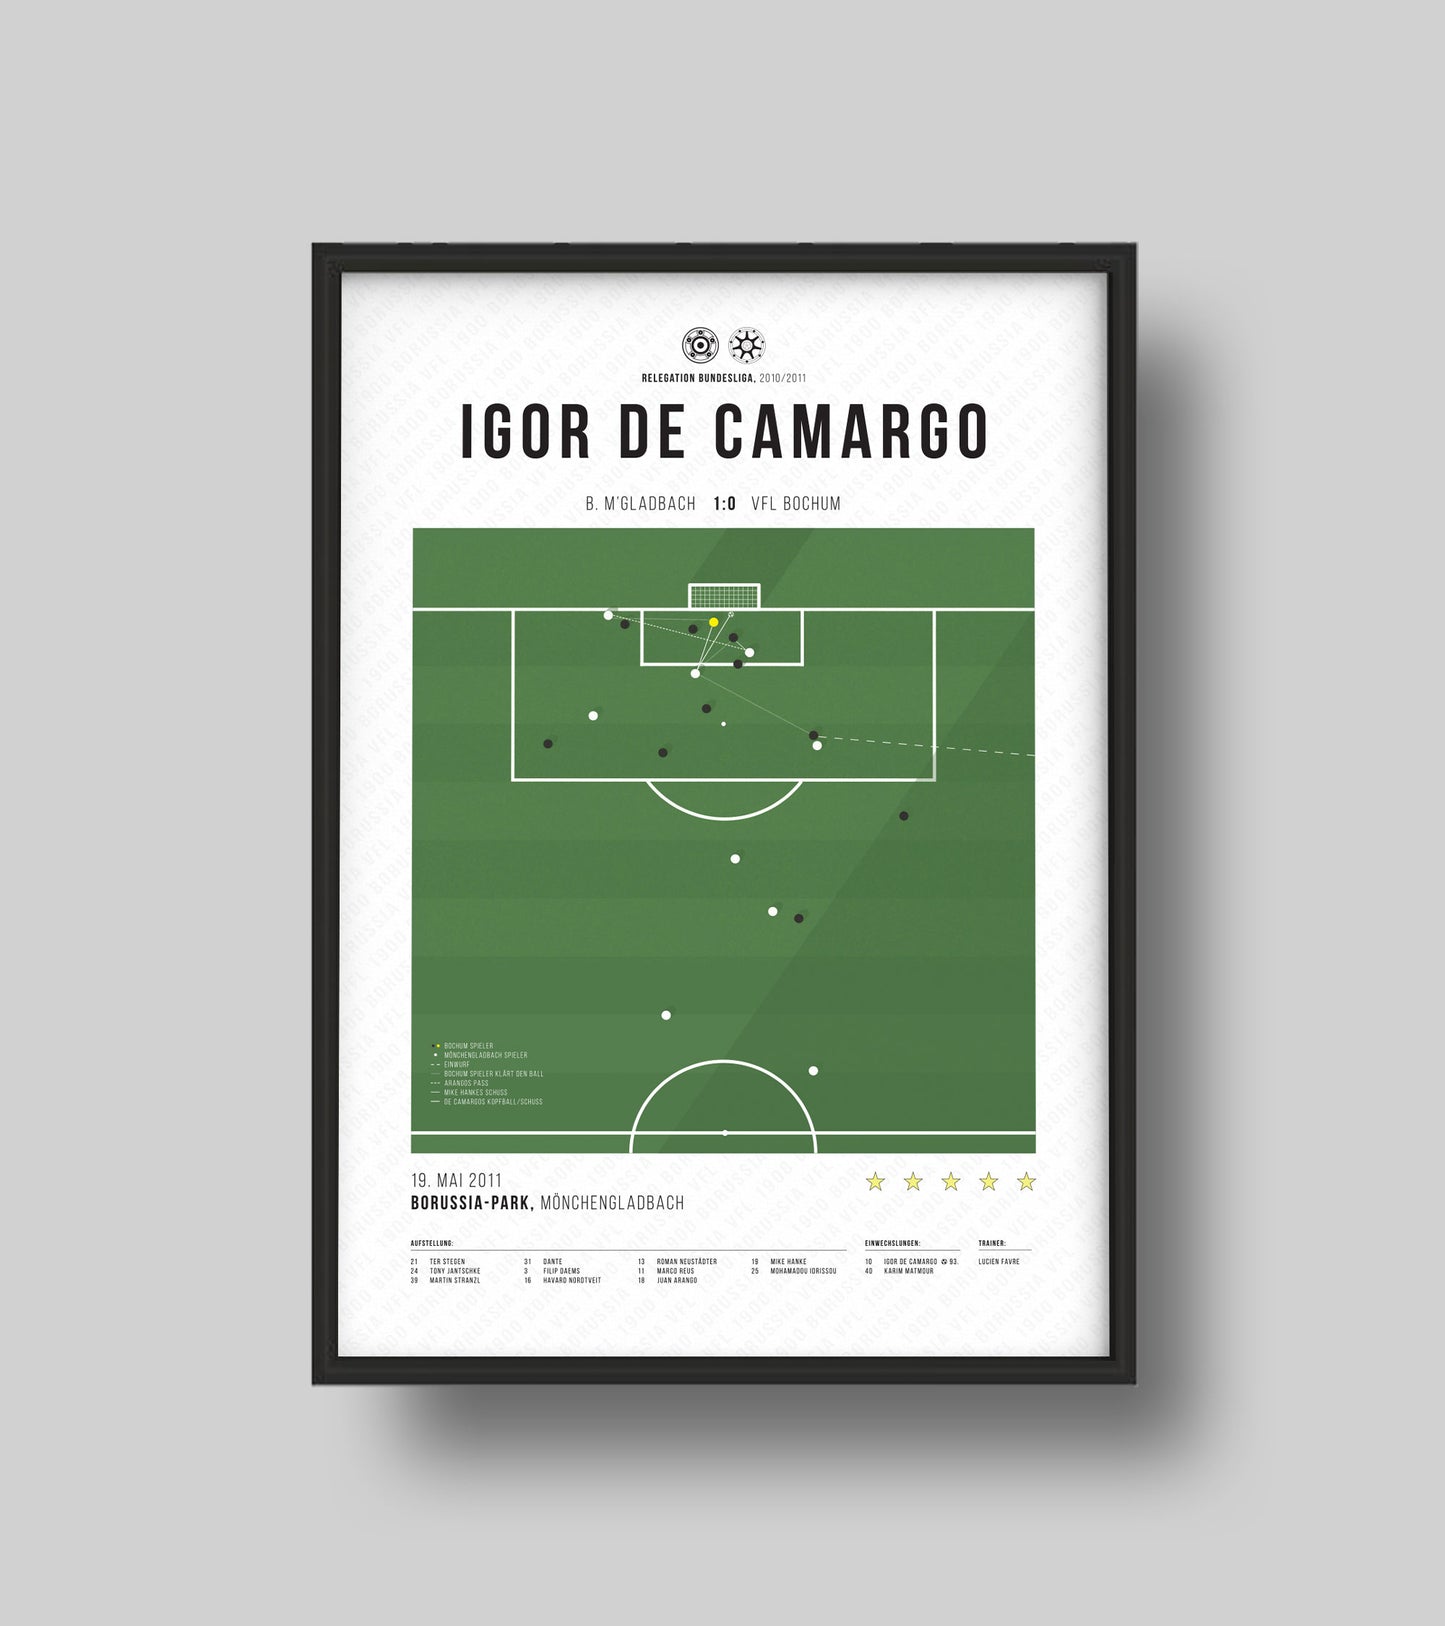 Last-minute goal from De Camargo